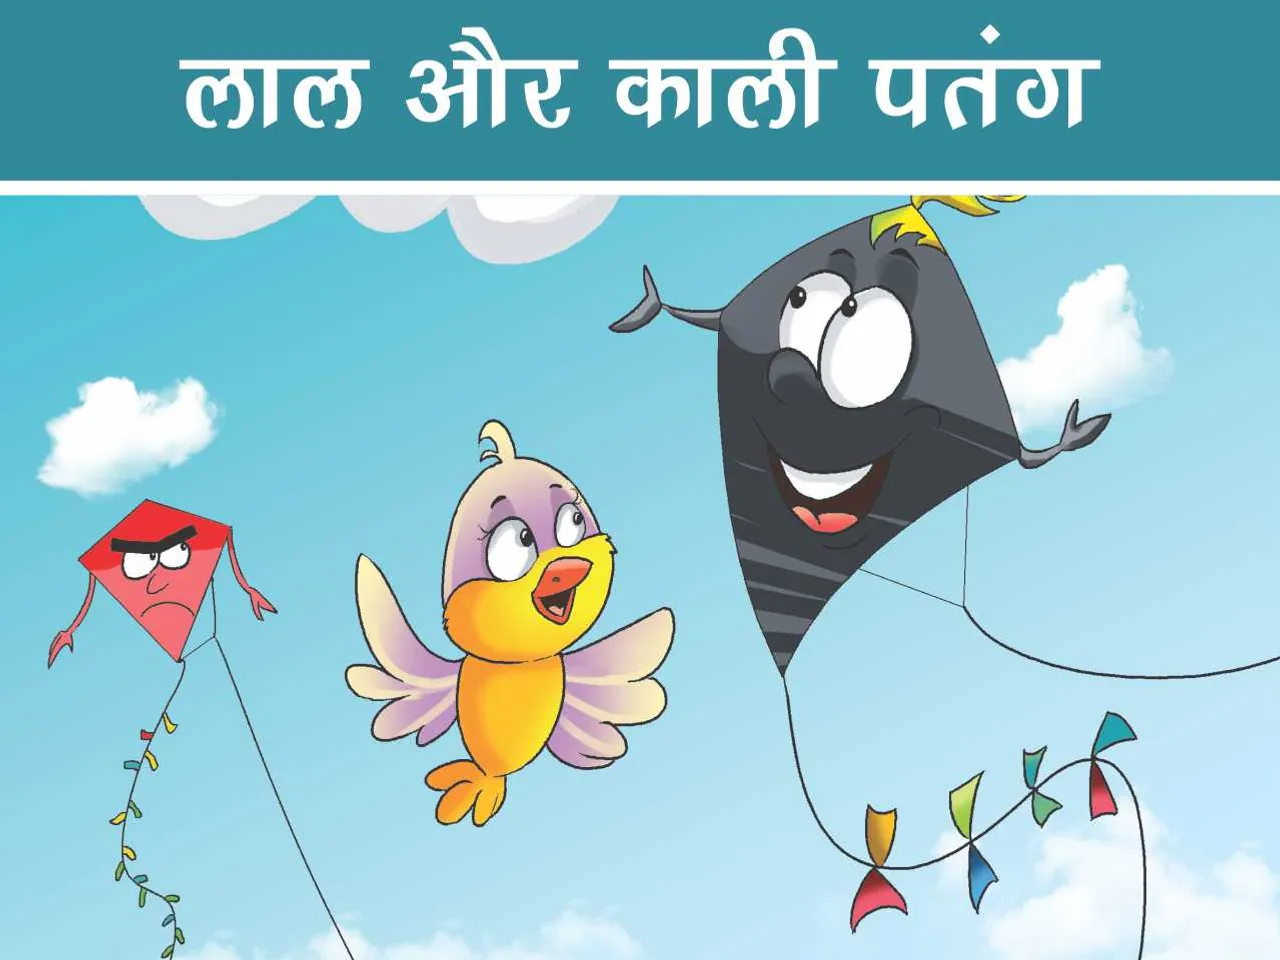 Colorfull kites flying in sky cartoon image